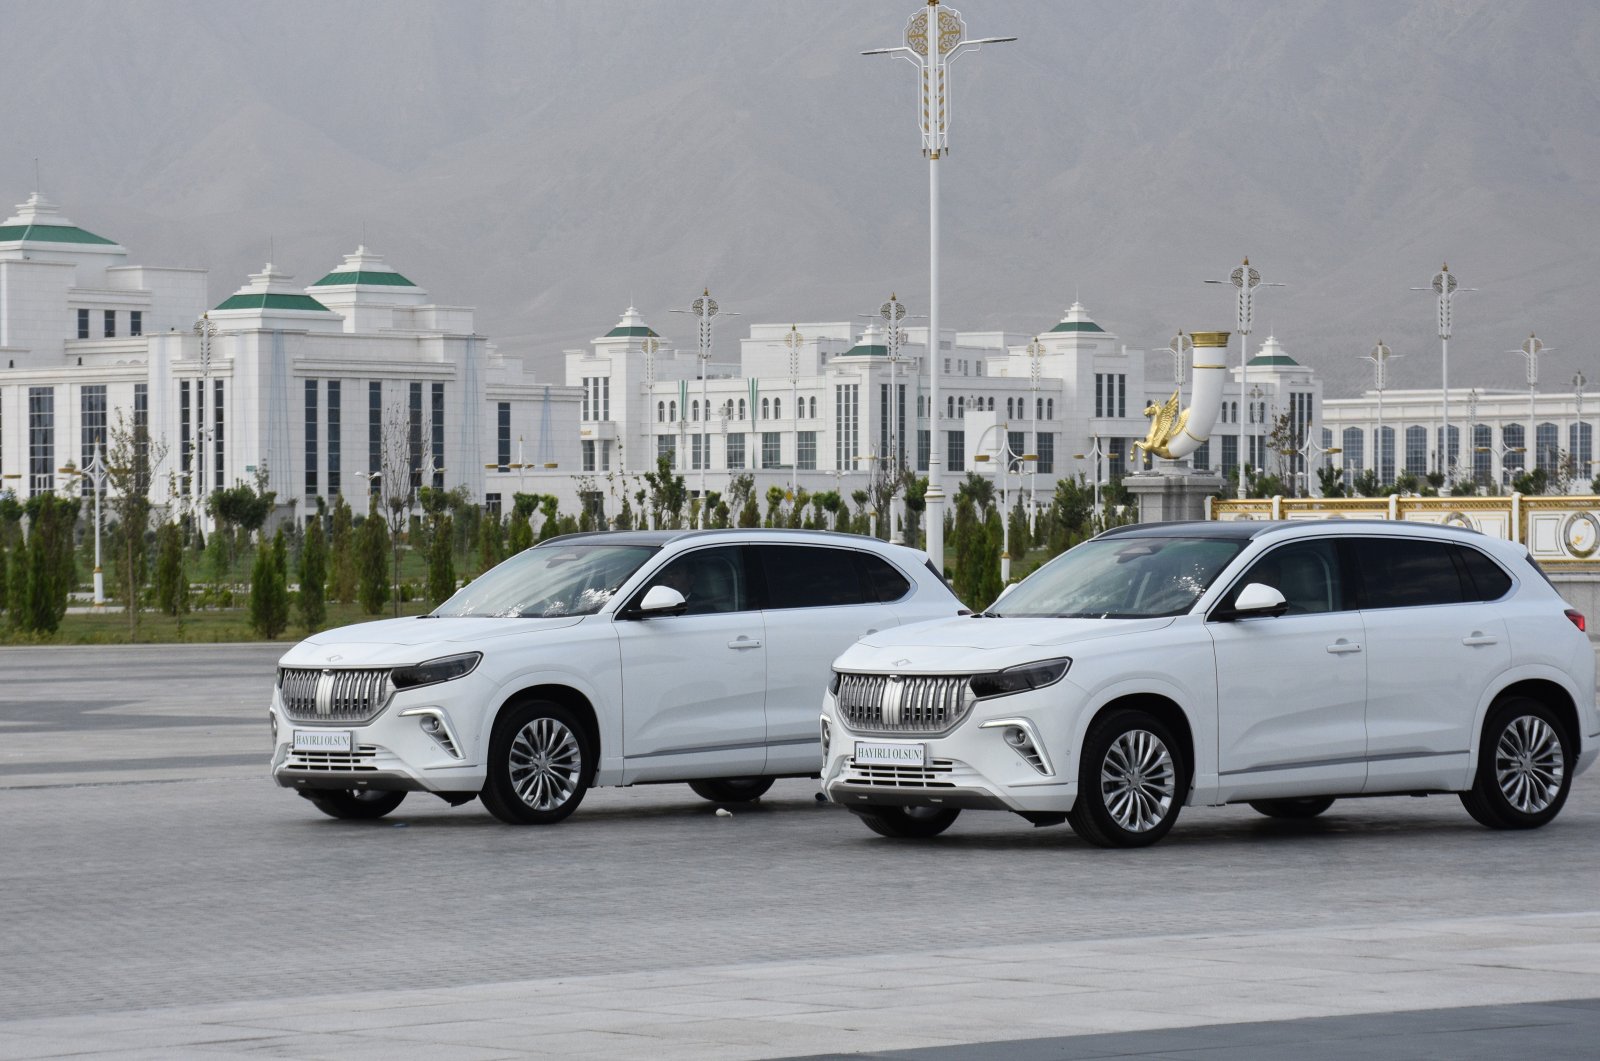 The Togg cars are seen in Ashgabat, Turkmenistan, June 30, 2023. (IHA Photo)